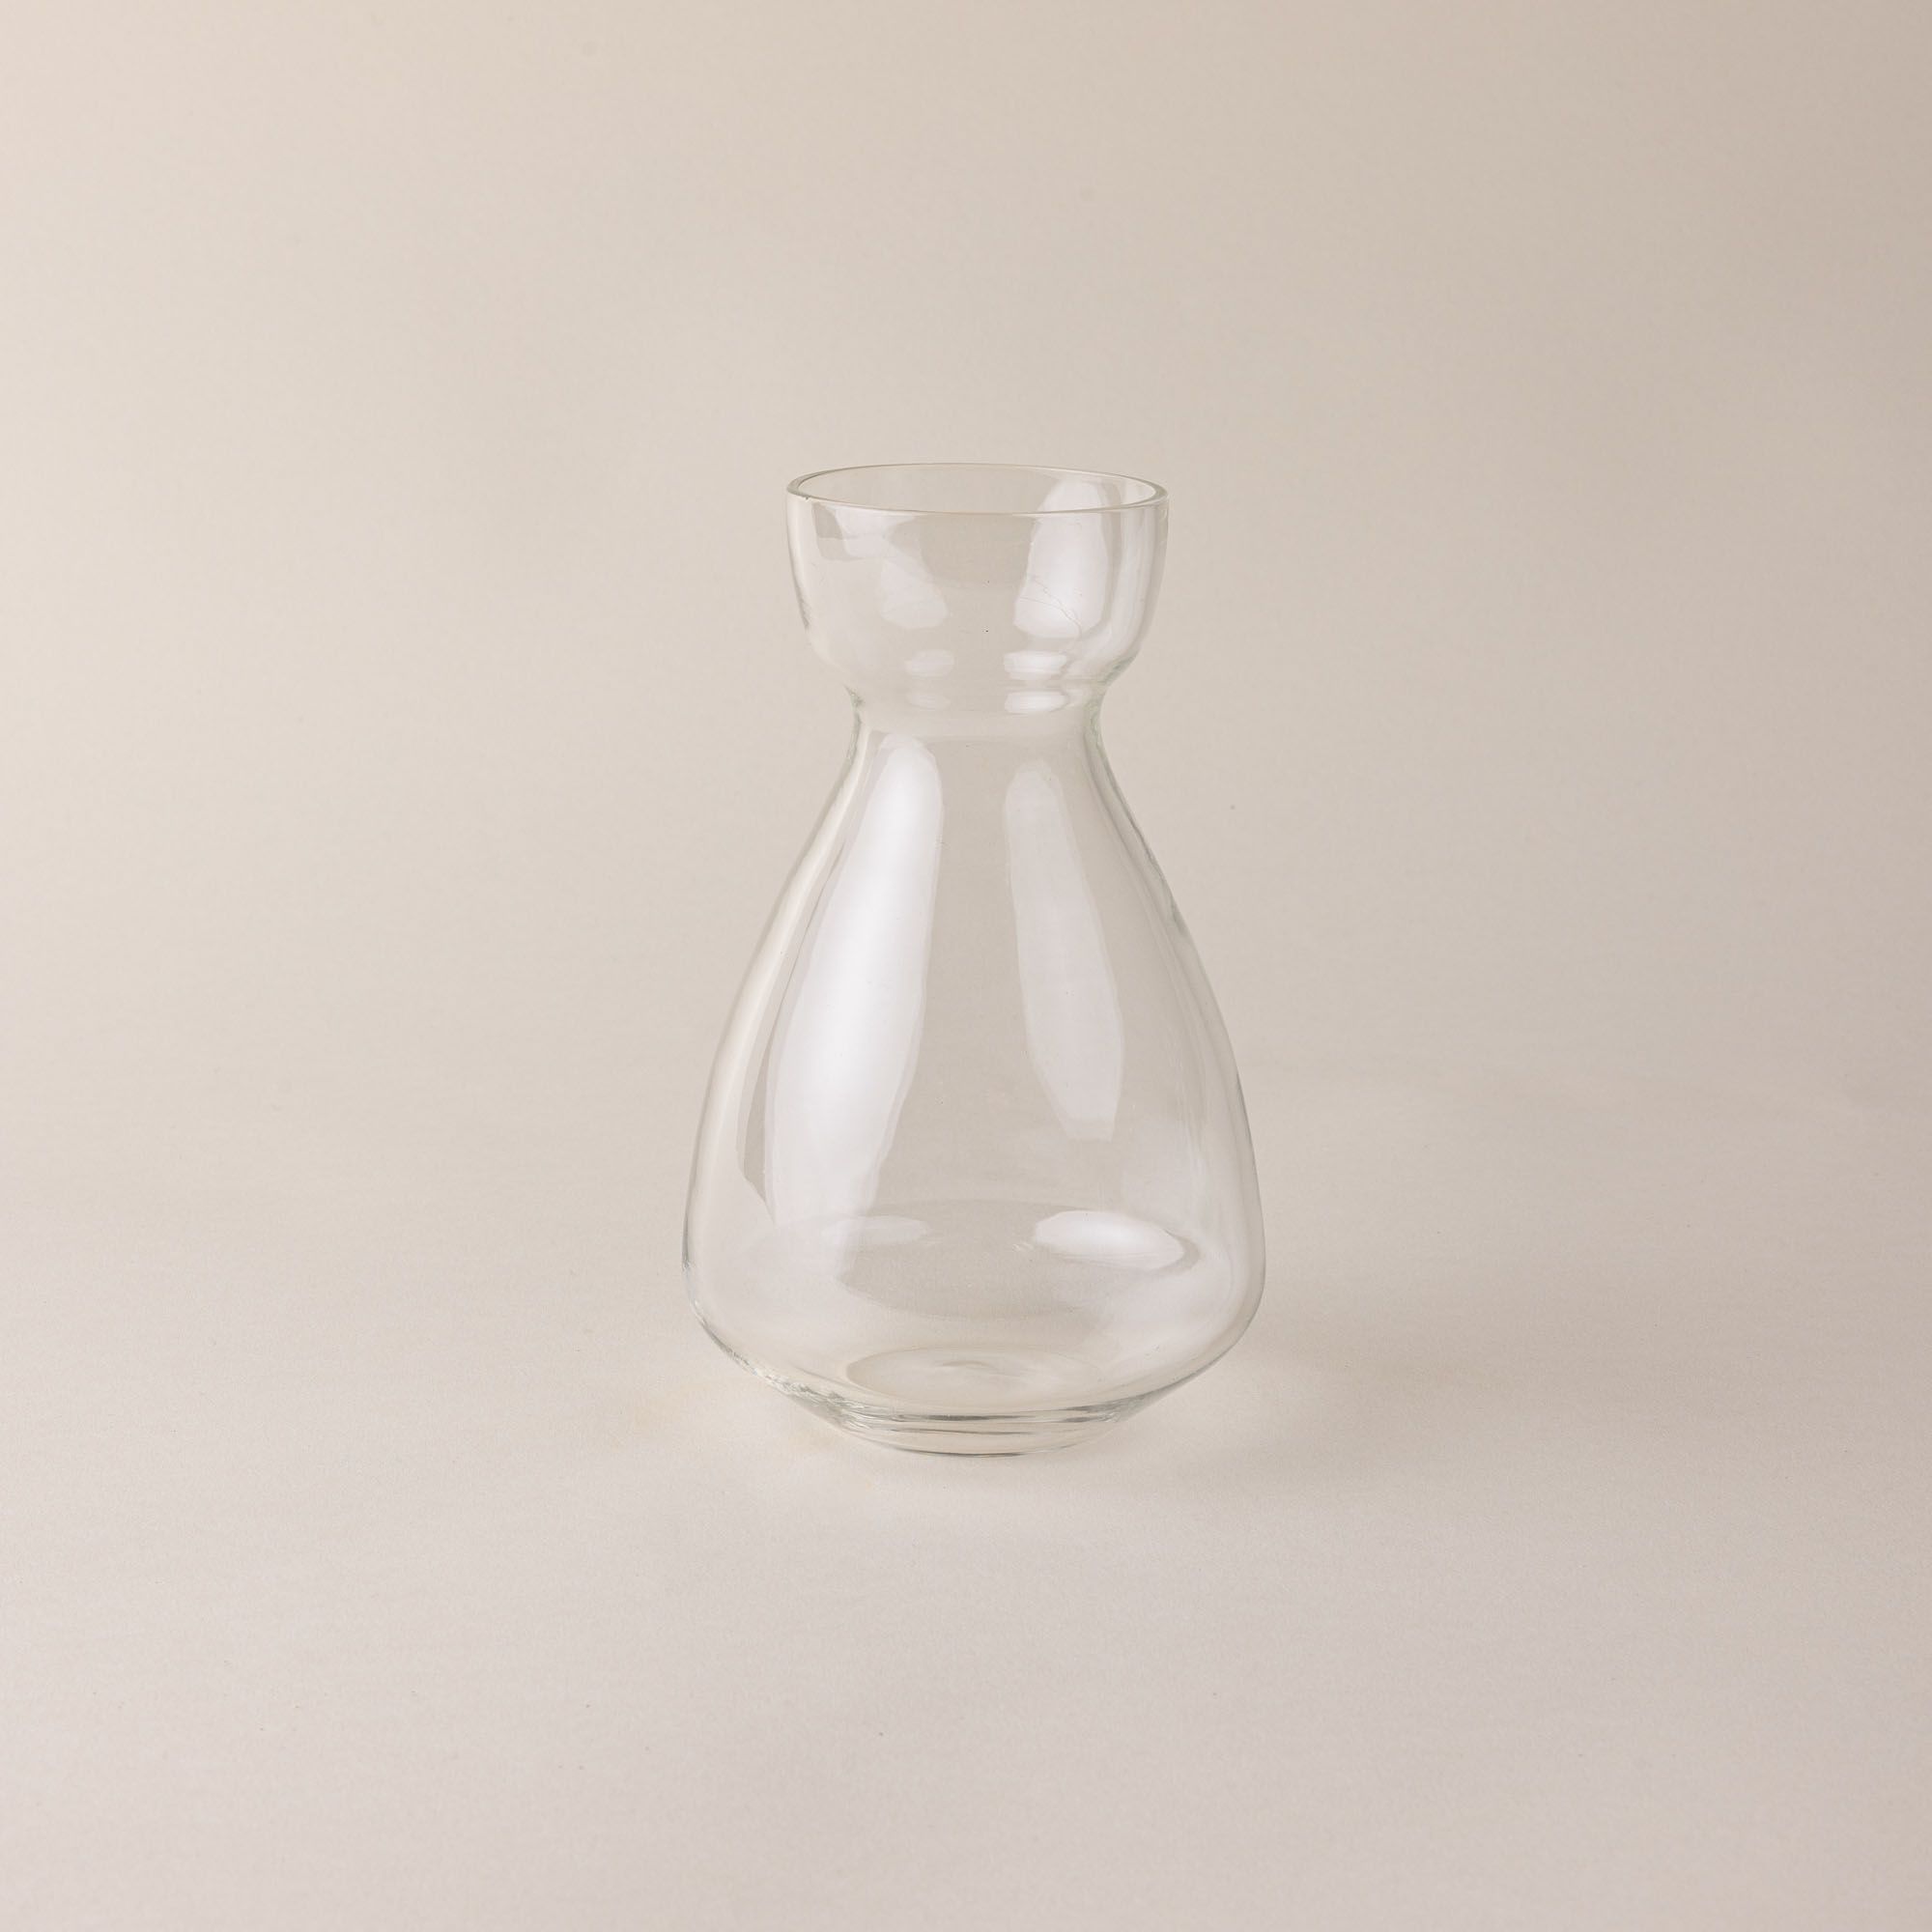 A clear simple sculptural glass bulb vase.